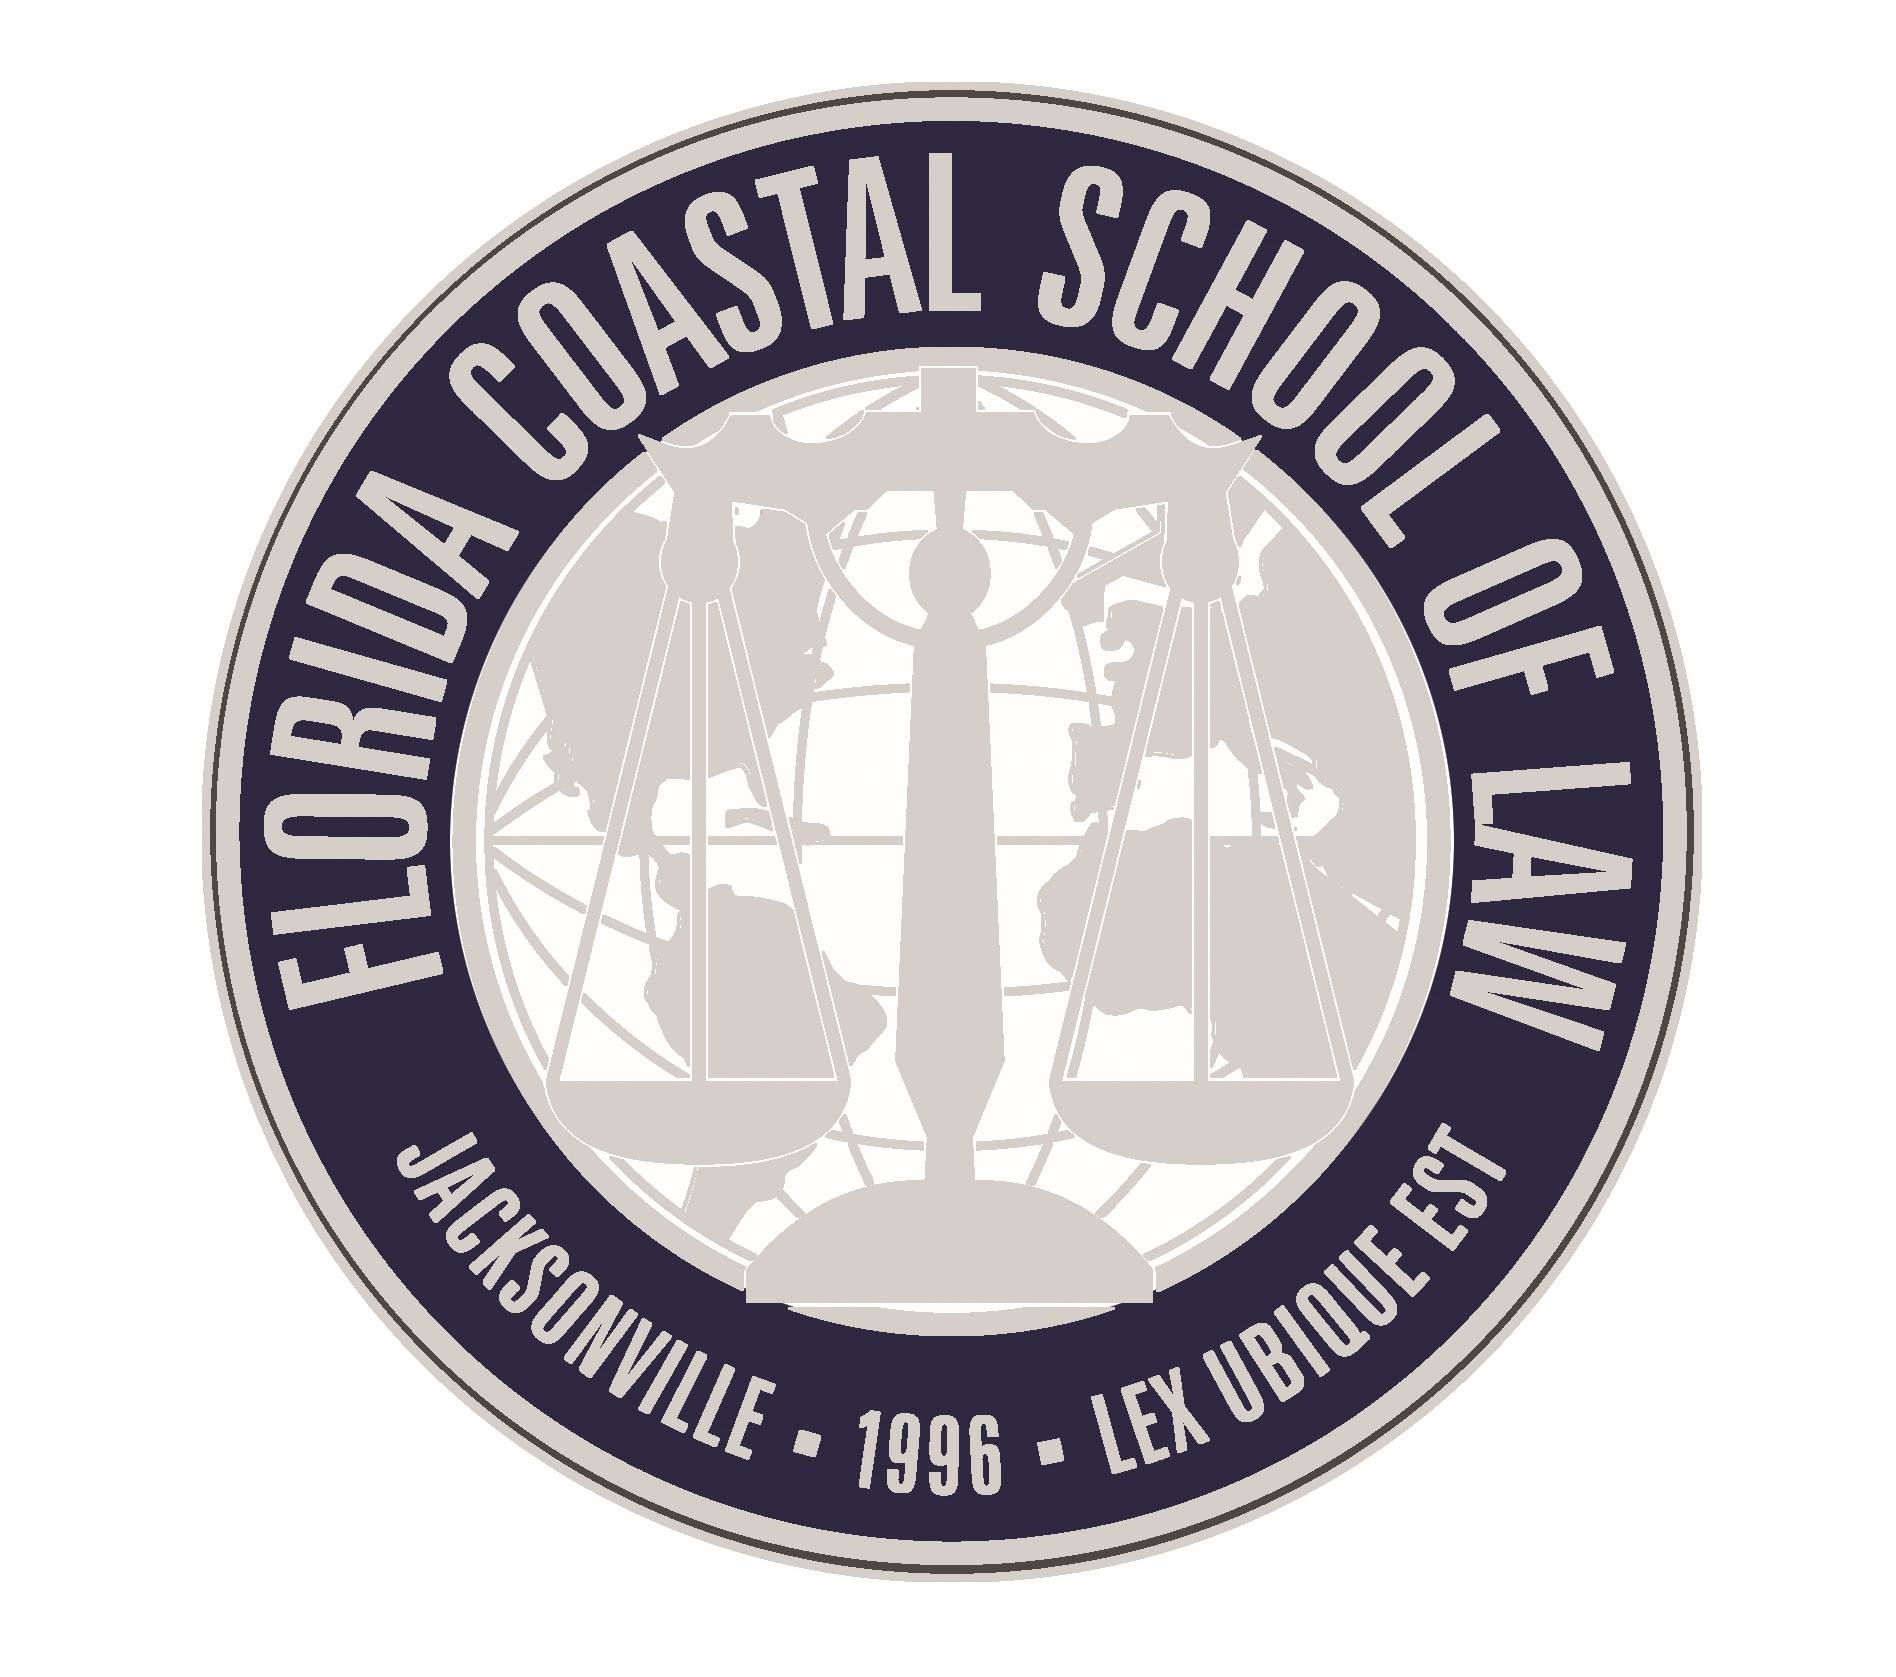 Florida Coastal School of Law